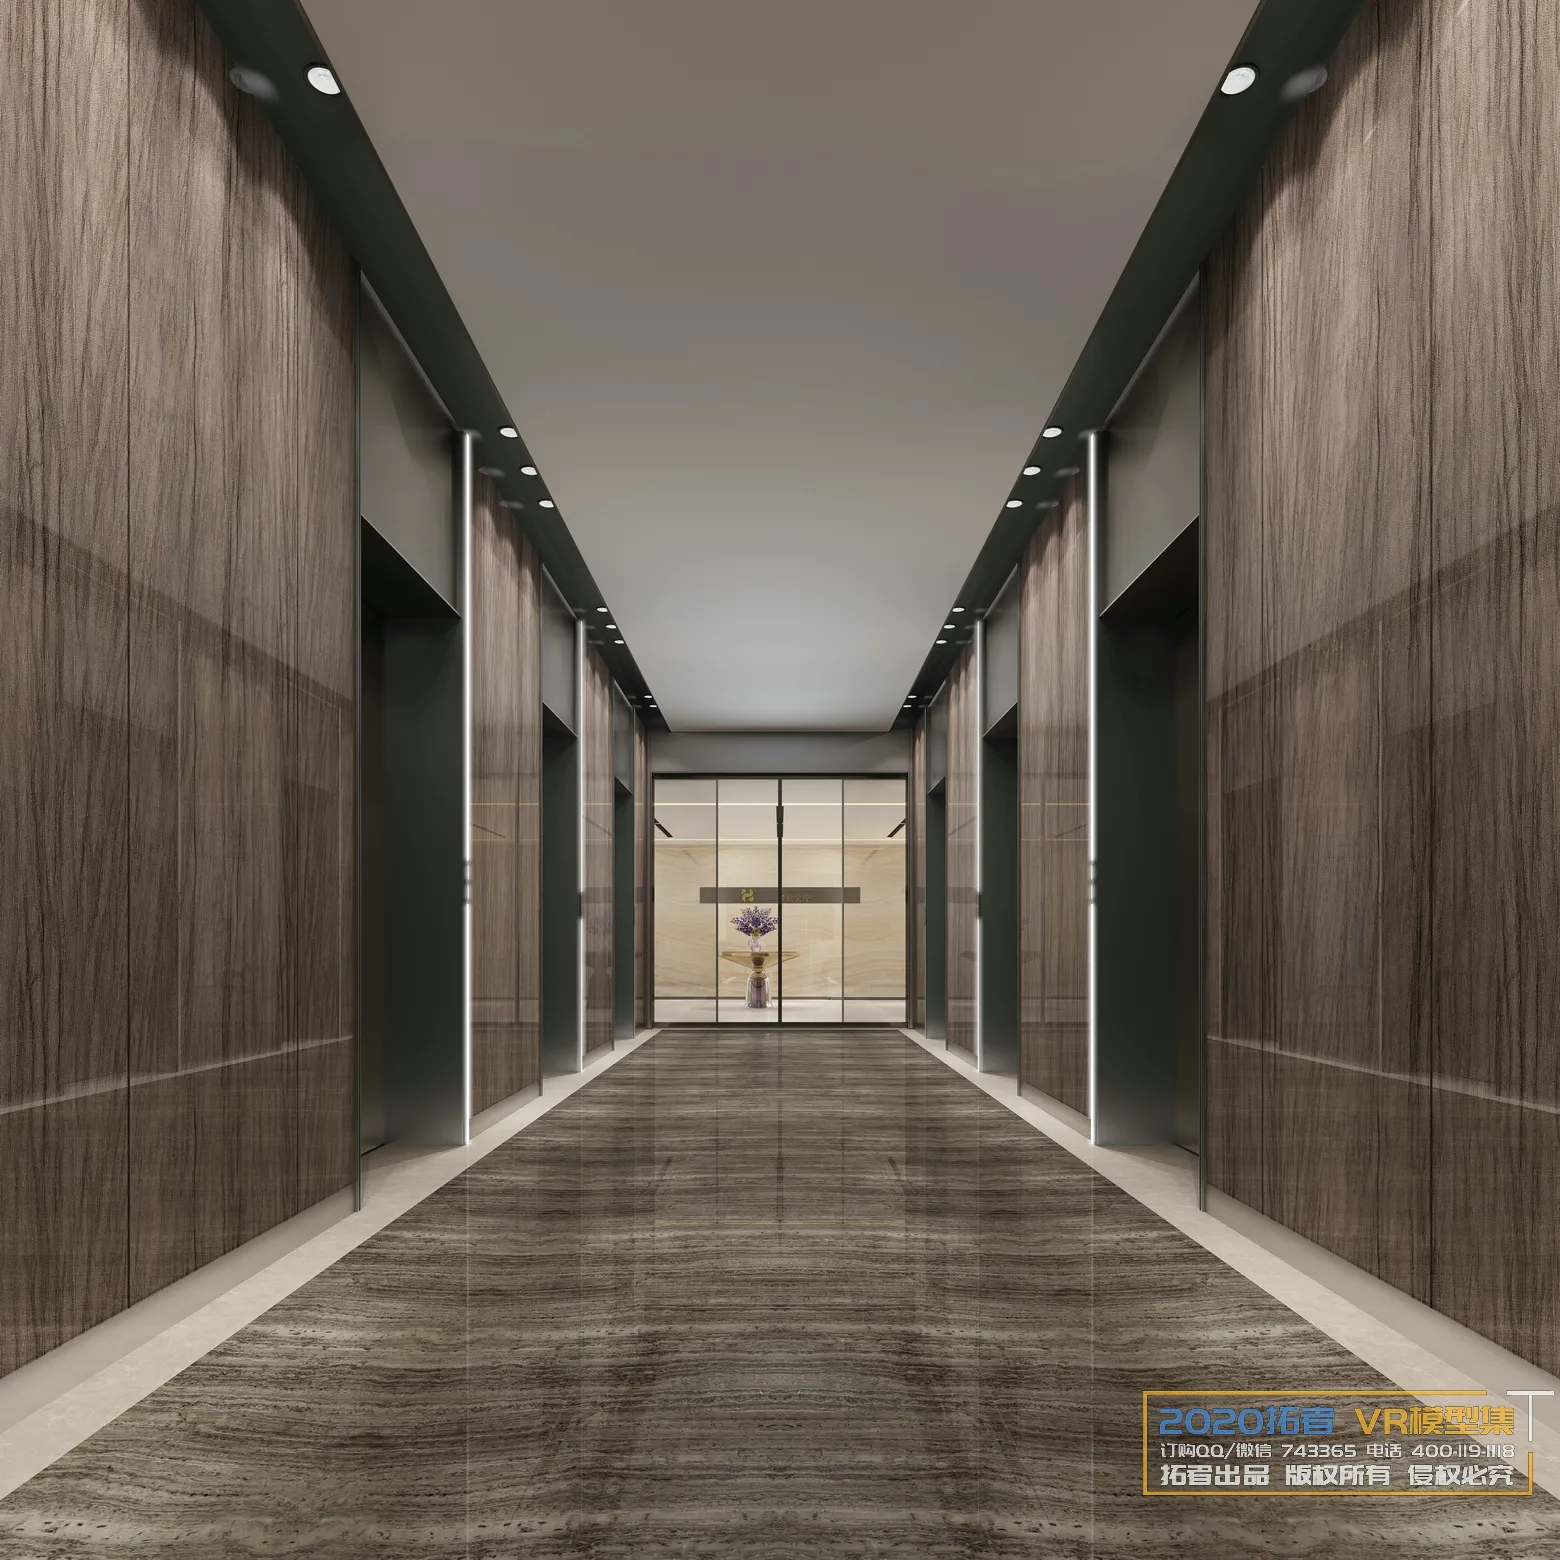 Extension Interior 20 – 12 – ELEVATOR & CORRIDOR – 36